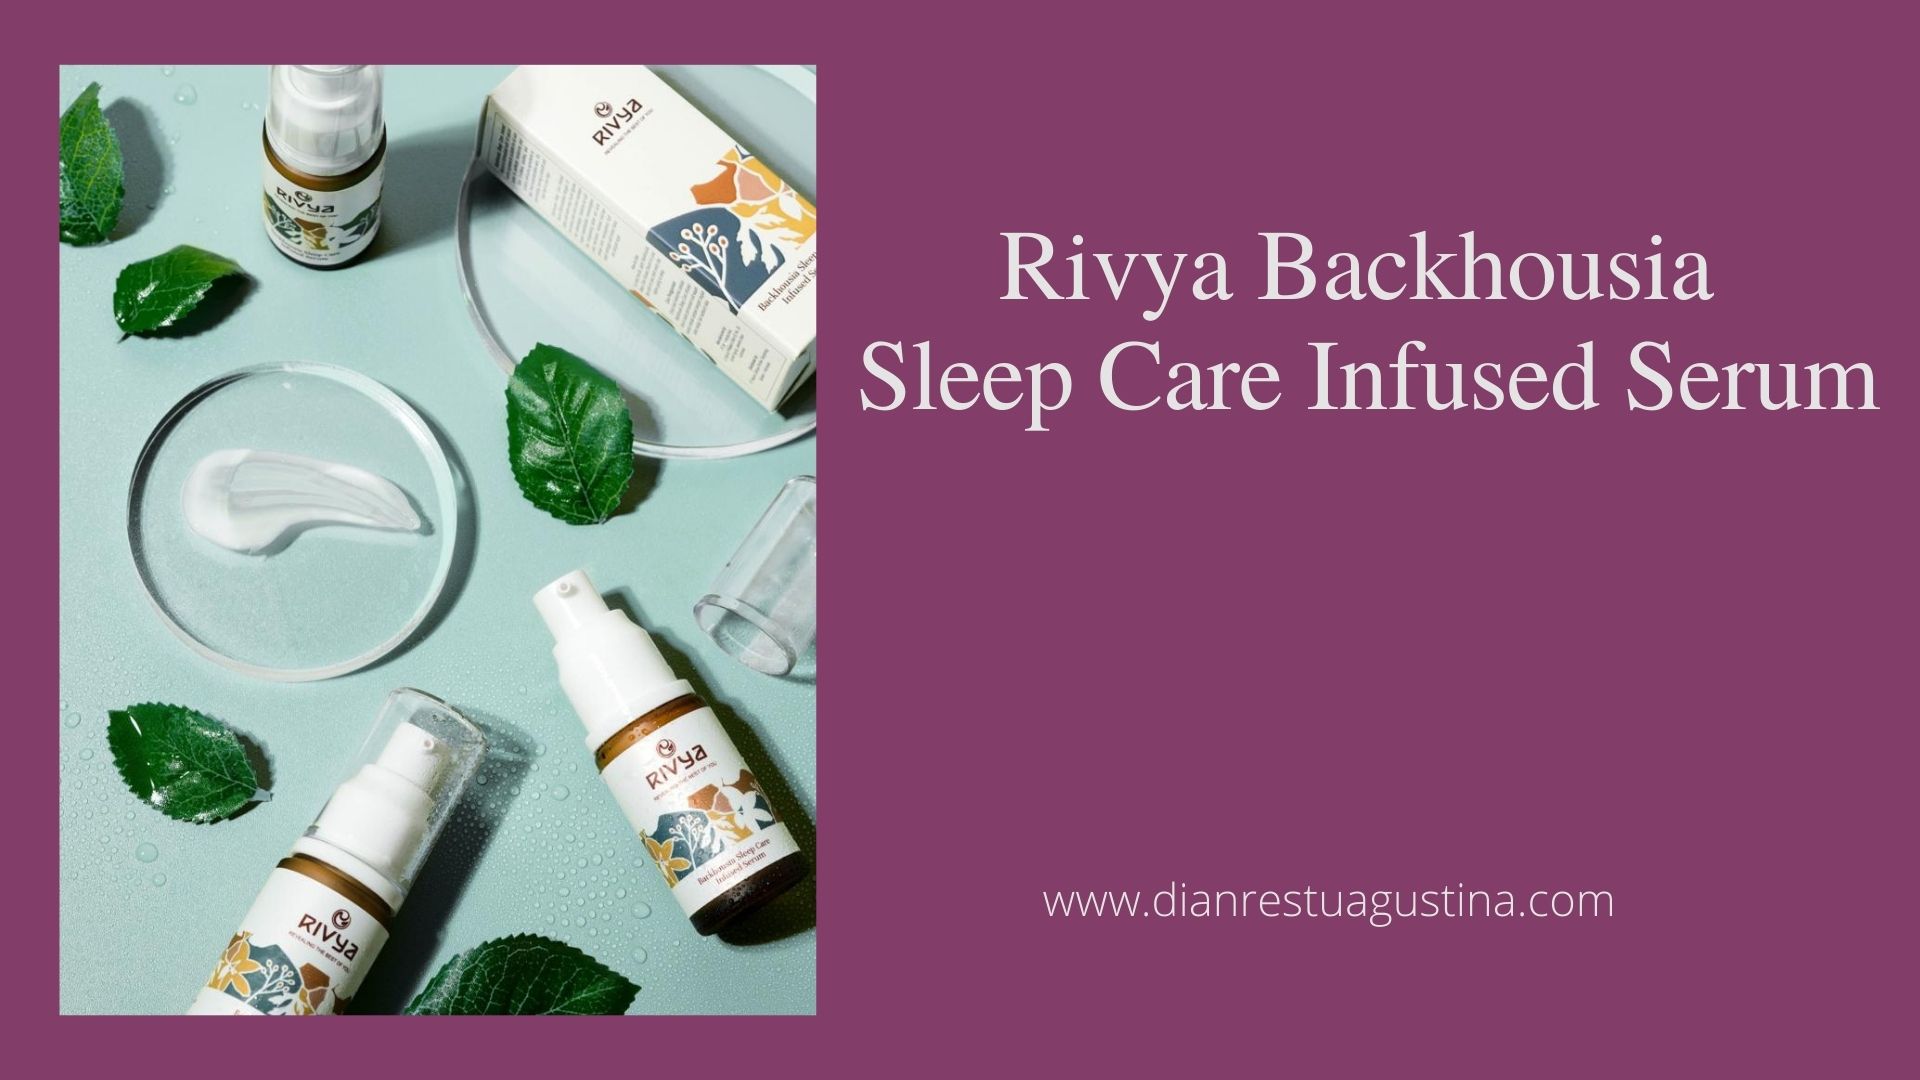 Review Rivya Backhousia Sleep Care Infused Serum